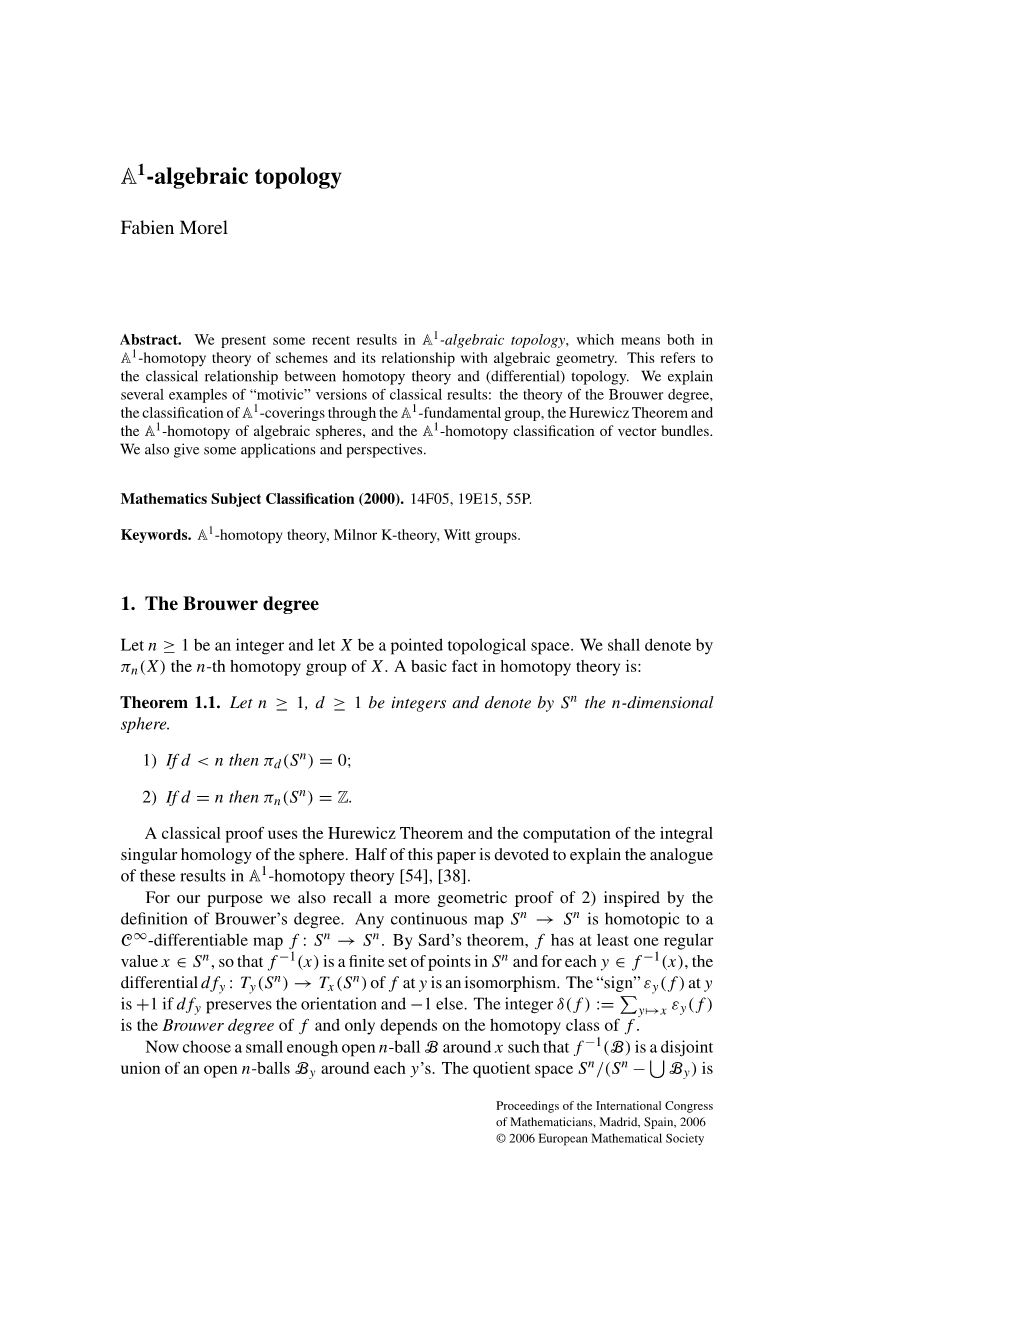 A1-Algebraic Topology